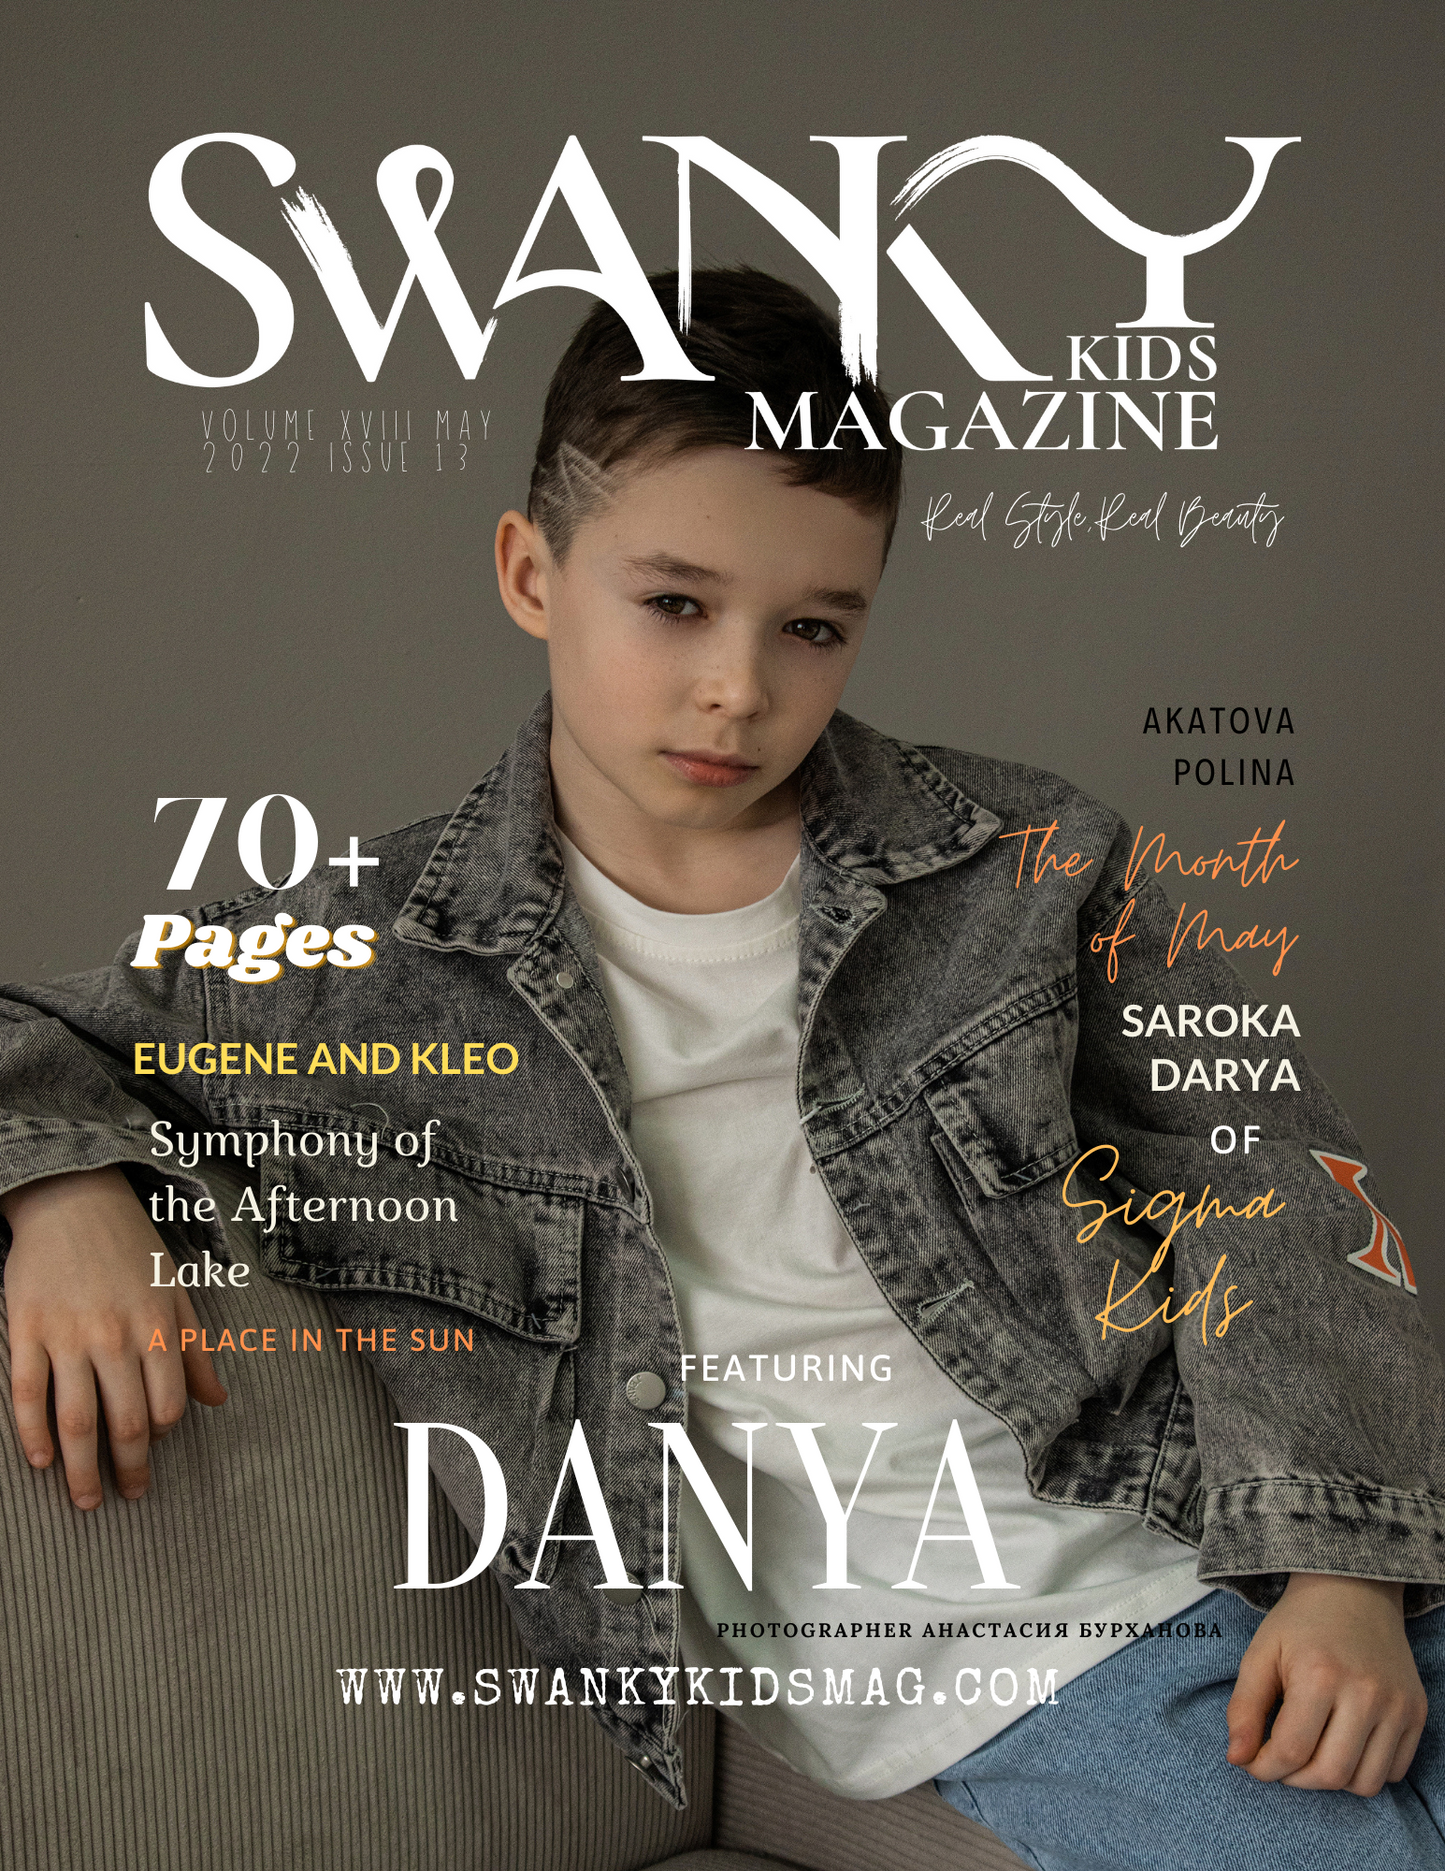 Swanky Kids Magazine MAY 2022 VOL XVIII Issue 13